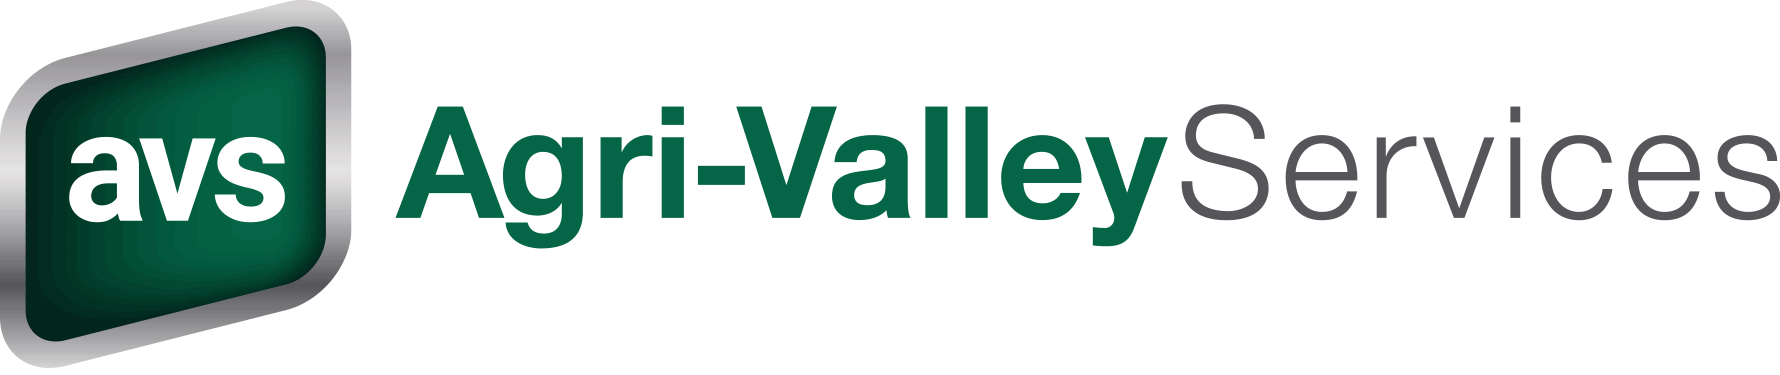 Agri-Valley Services Logo